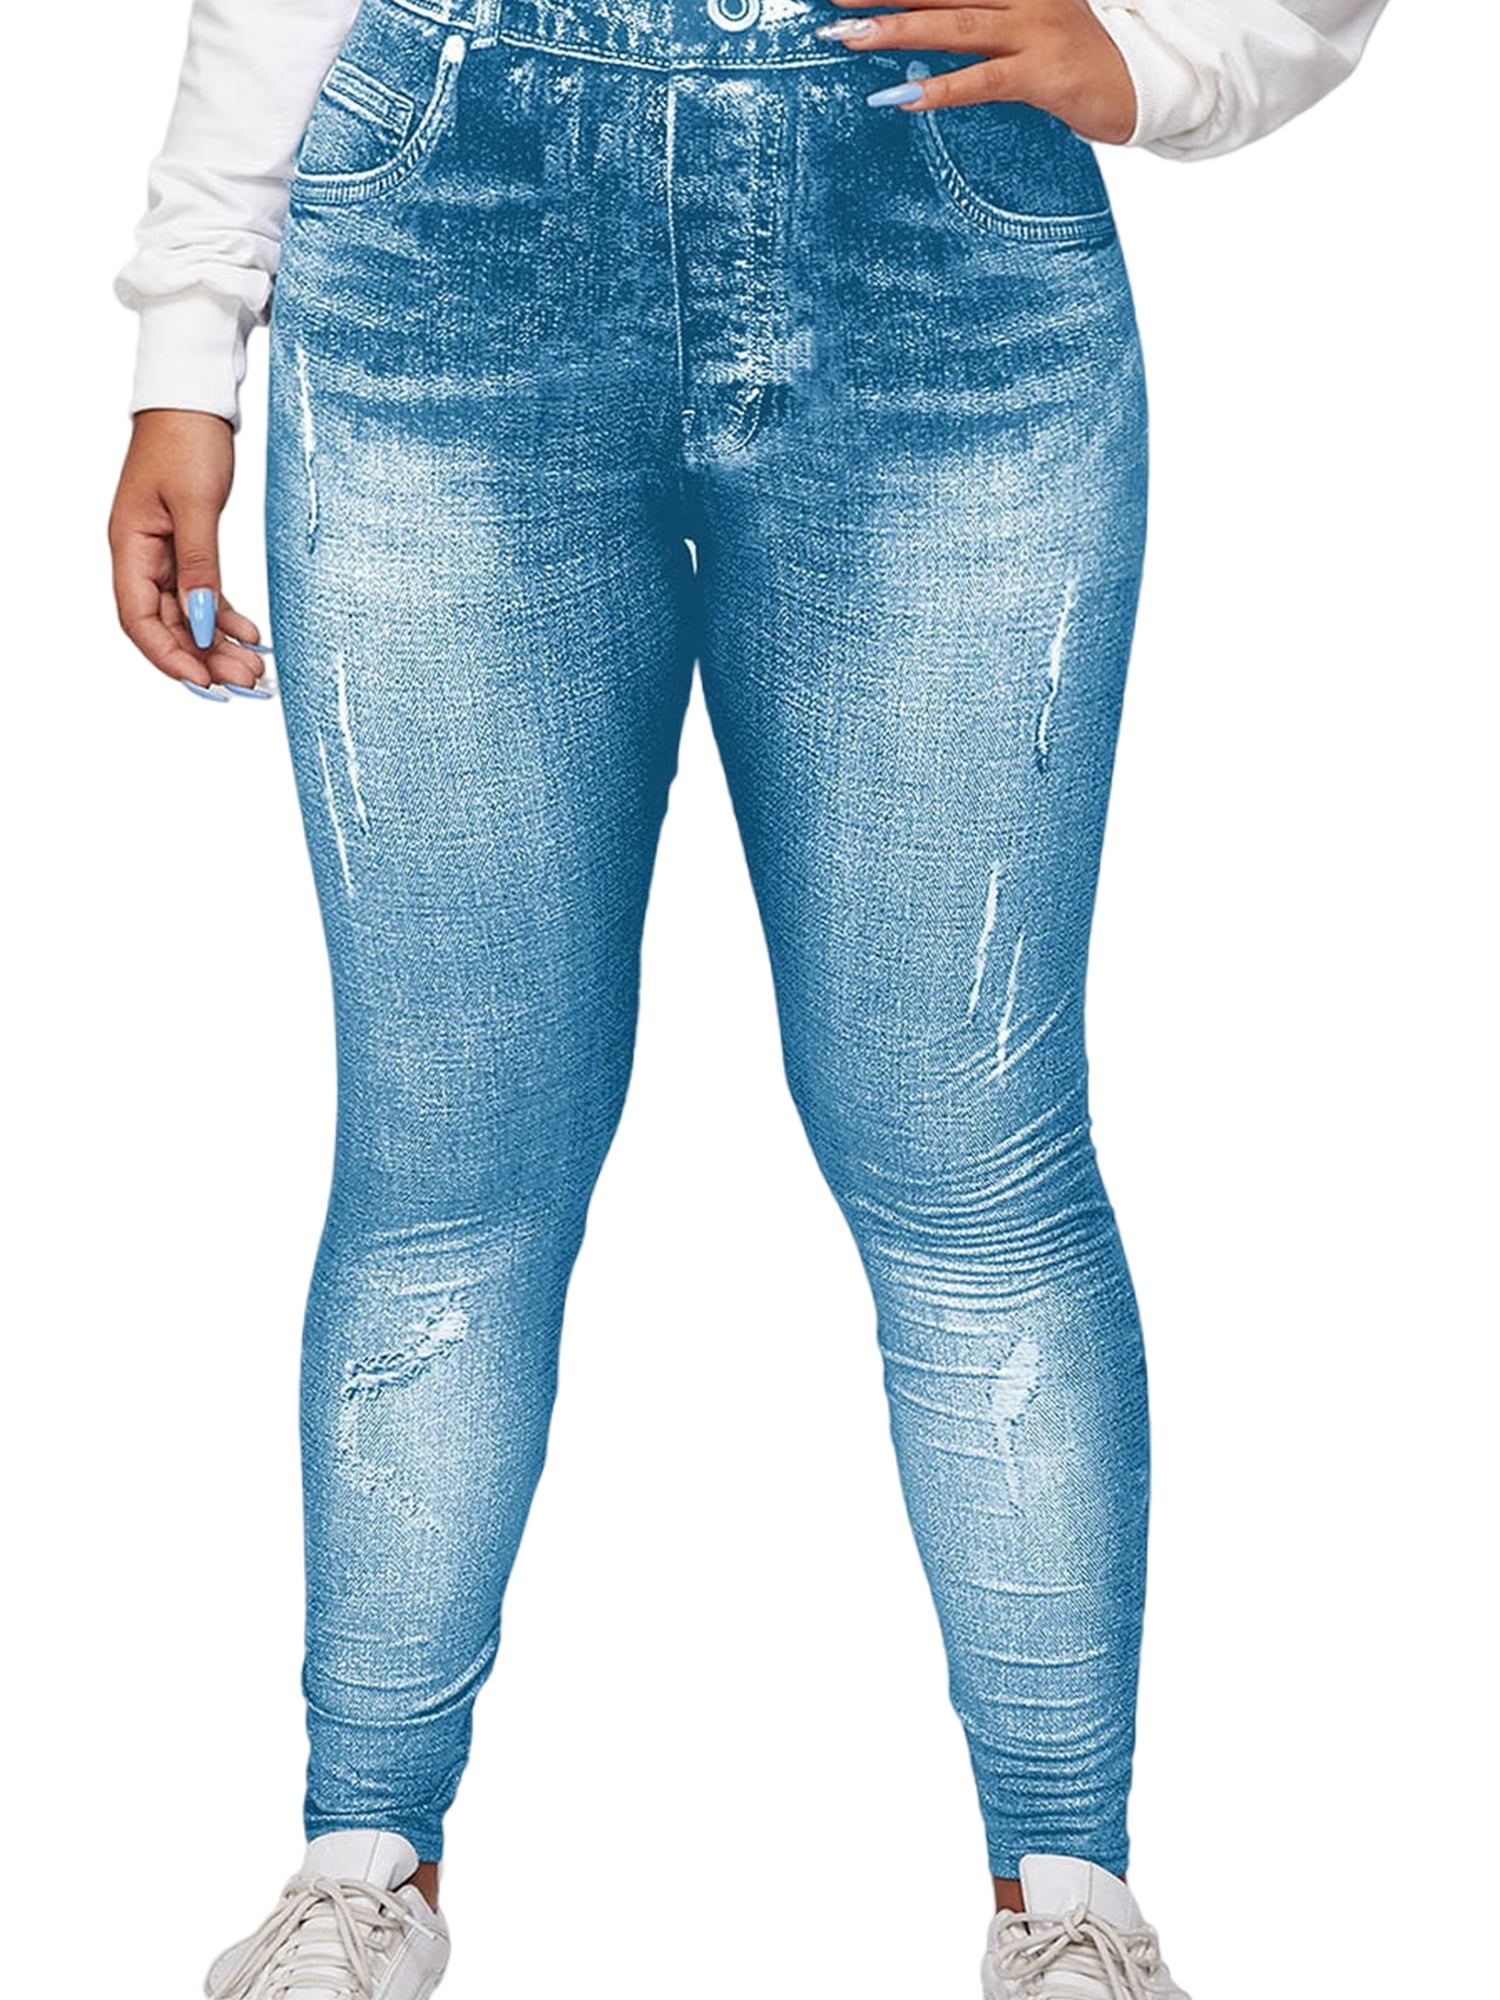 UKAP Women Plus Size Leggings Tummy Control Fake Jeans High Waist